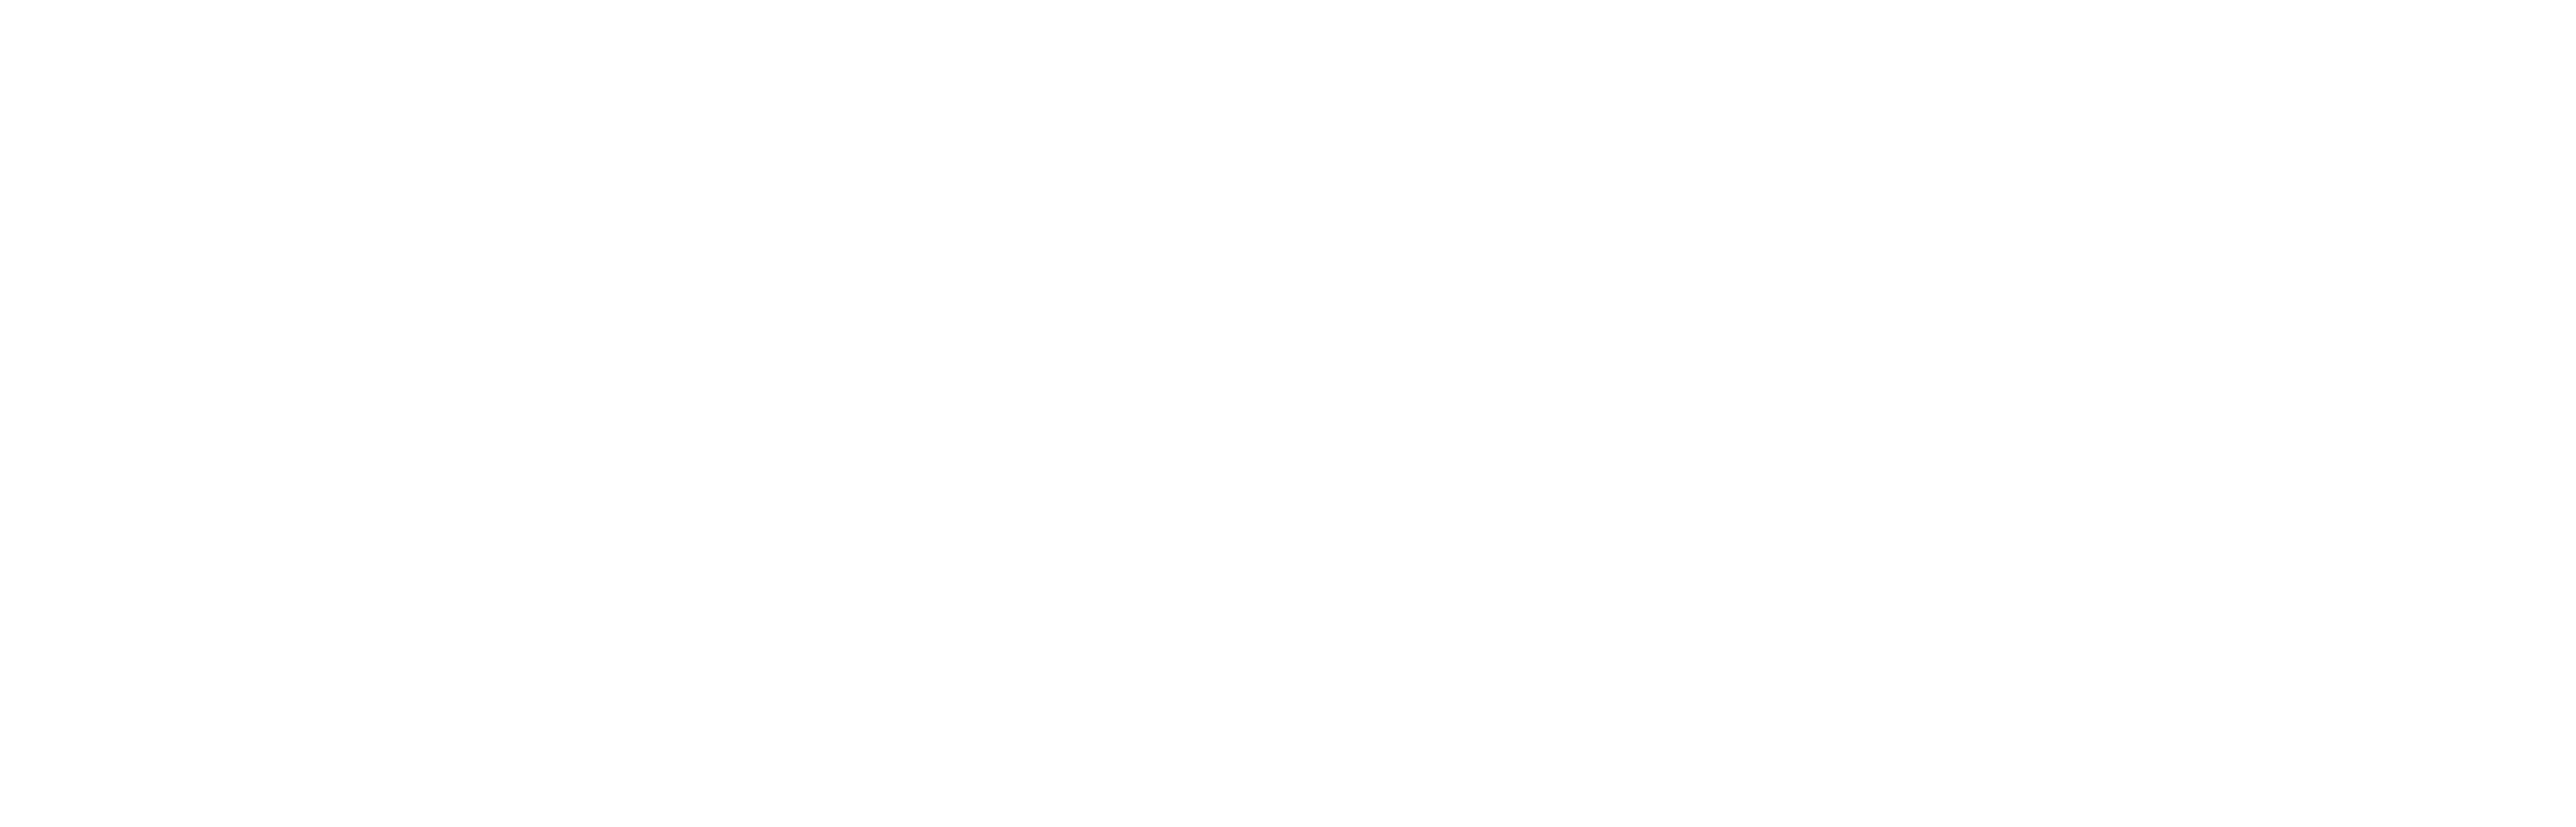 Pennine Trust logo